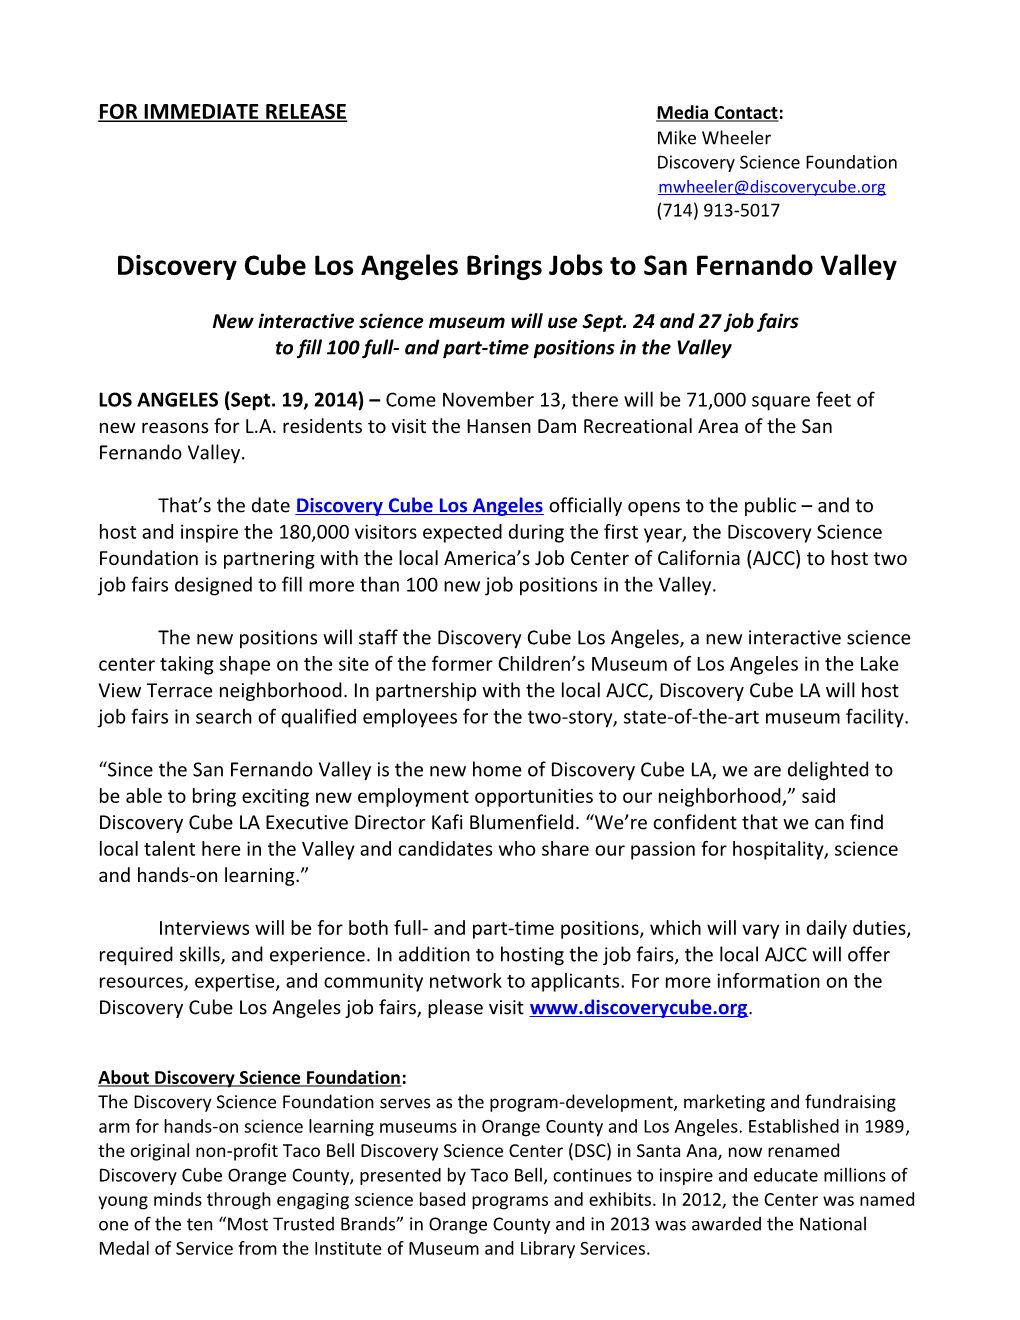 Discovery Cube LA Brings Jobs to San Fernando Valley